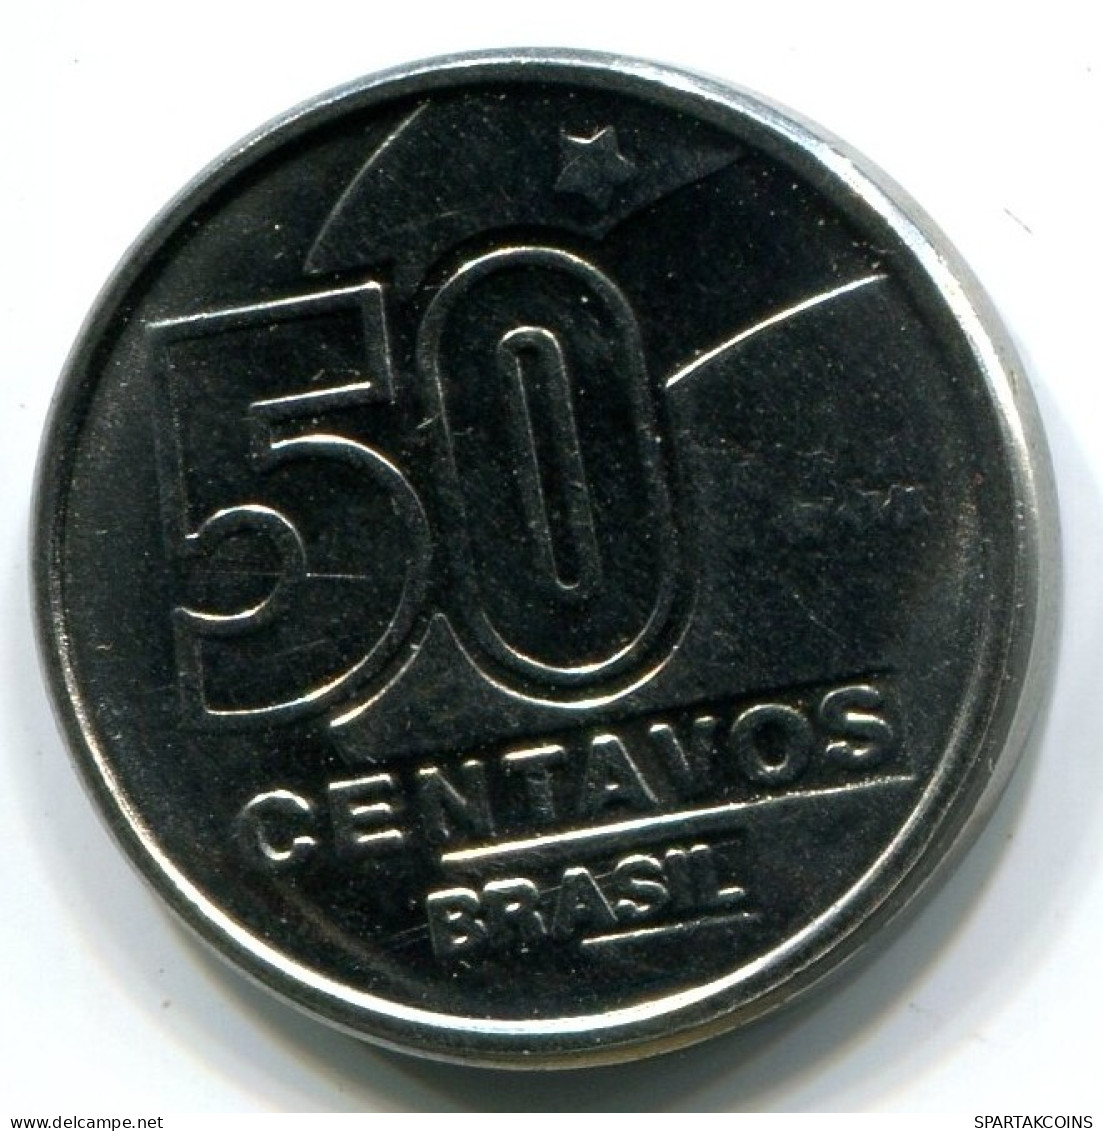 50 CENTAVOS 1989 BRAZIL Coin UNC #W11395.U.A - Brasil